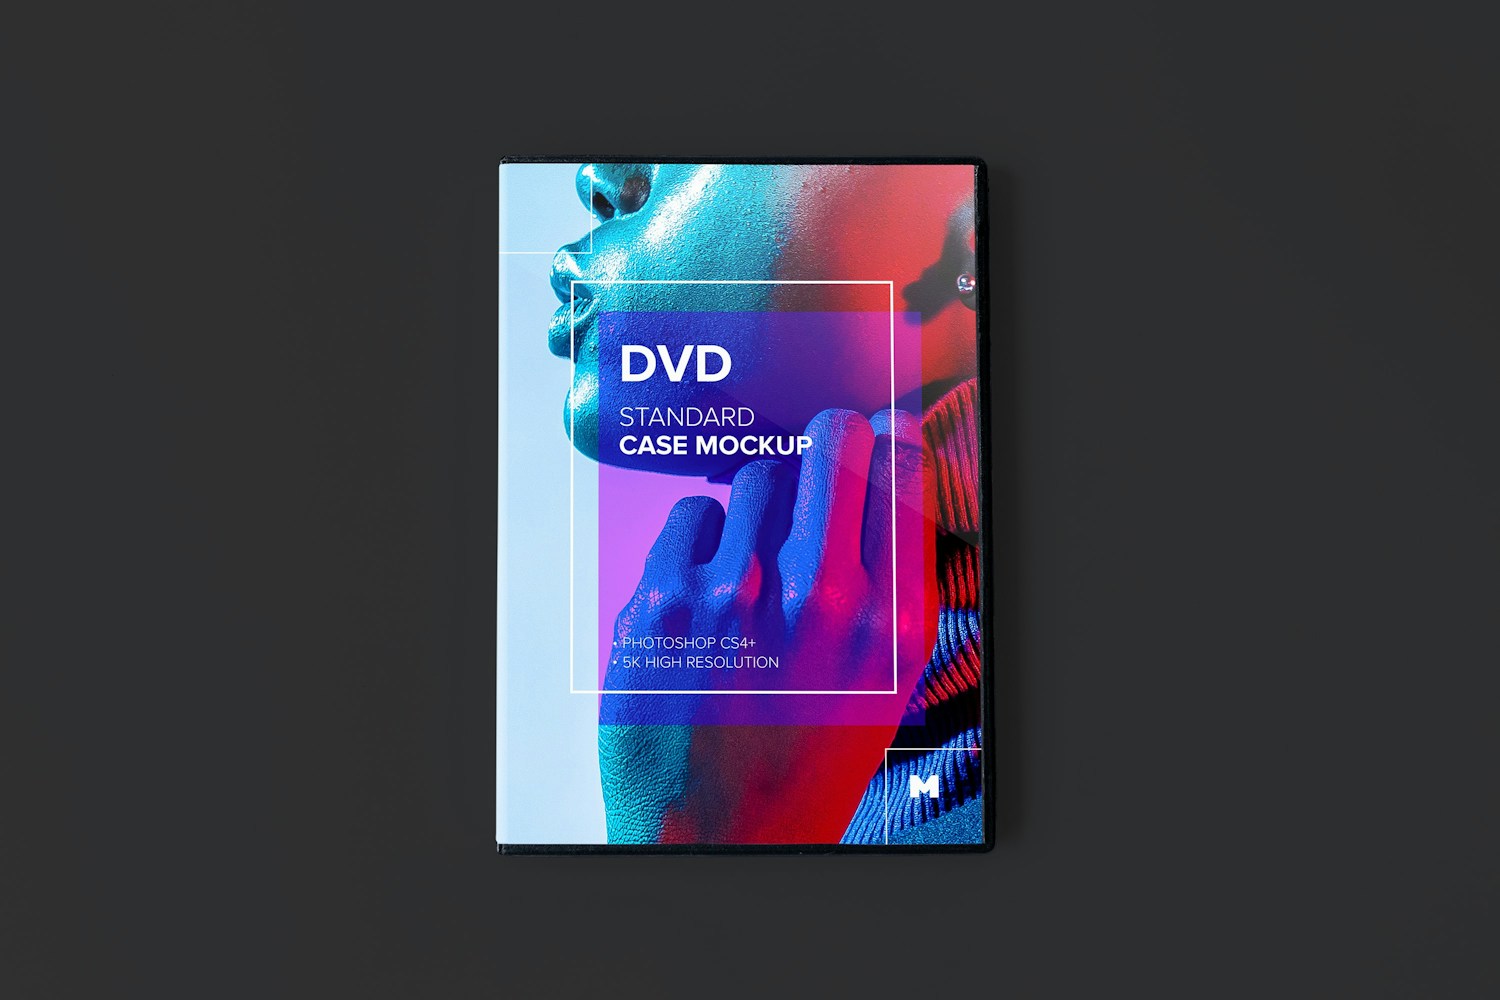 Standard DVD Case Mockup